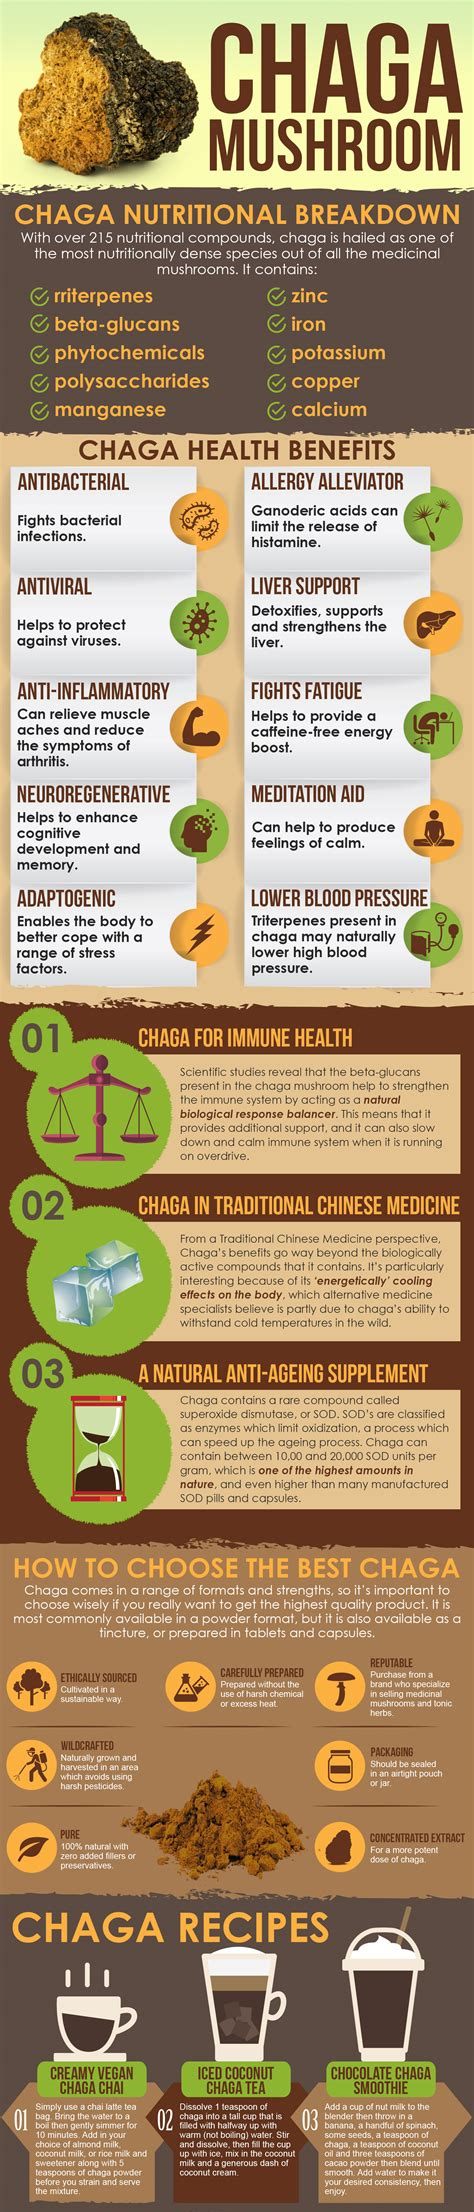 chaga infographic